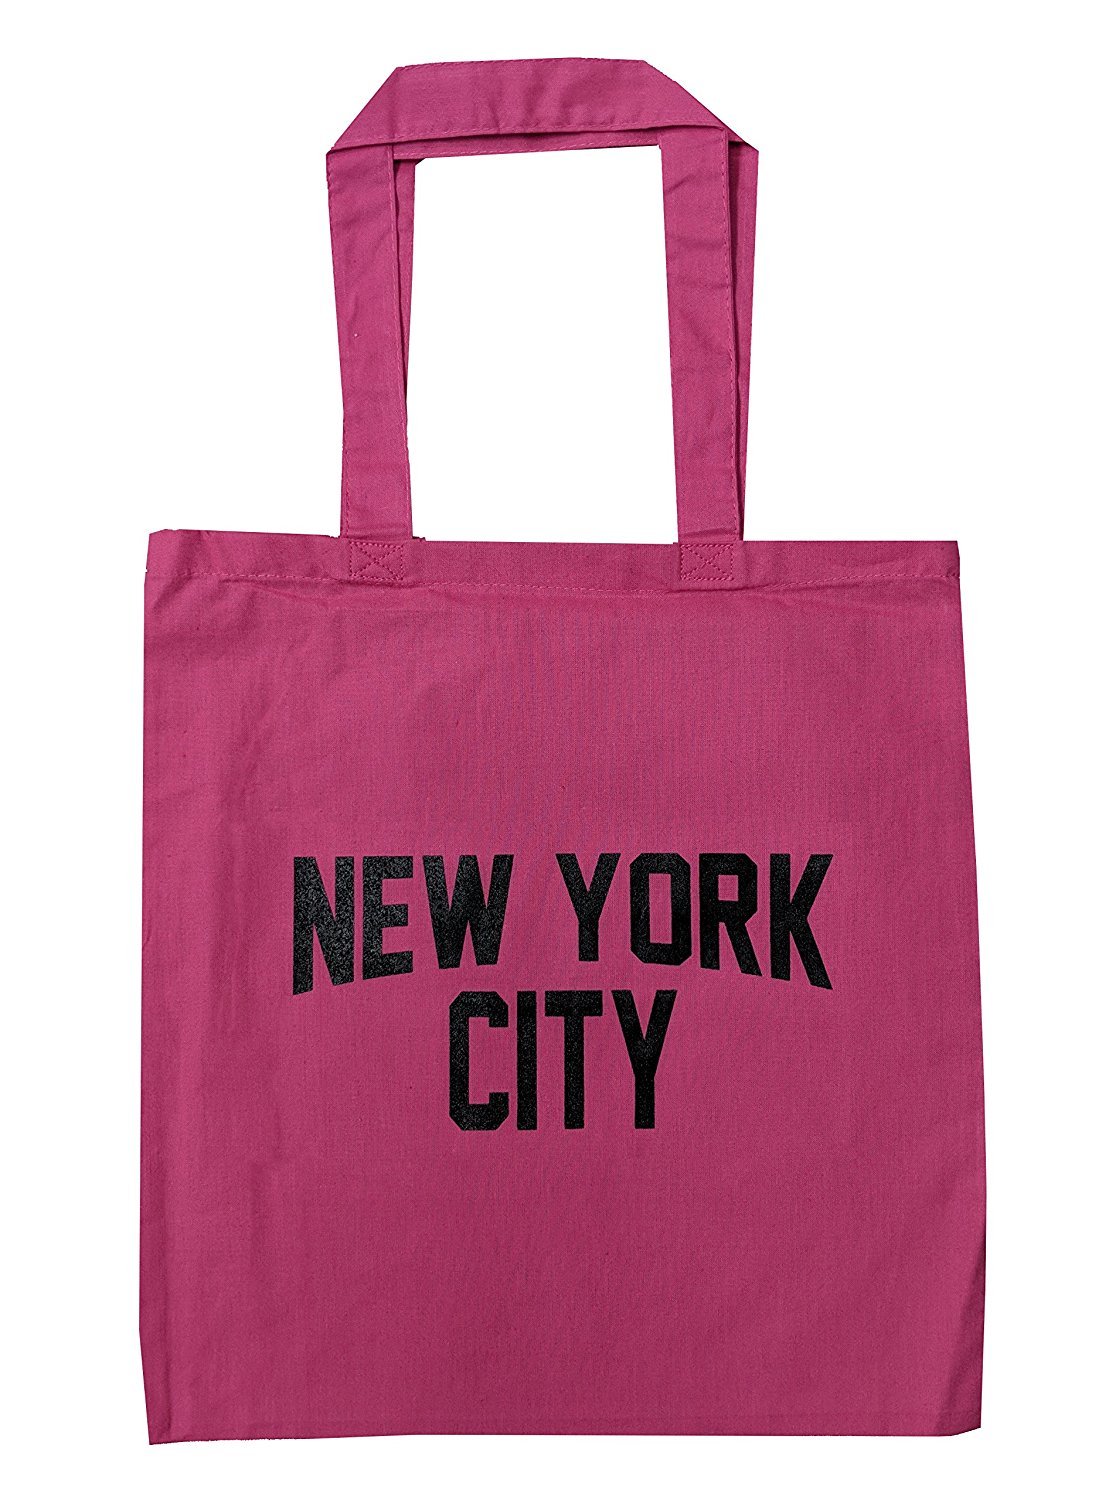 NYC Tote Bag New York City 100% Cotton Canvas Screenprinted (Hot Pink)